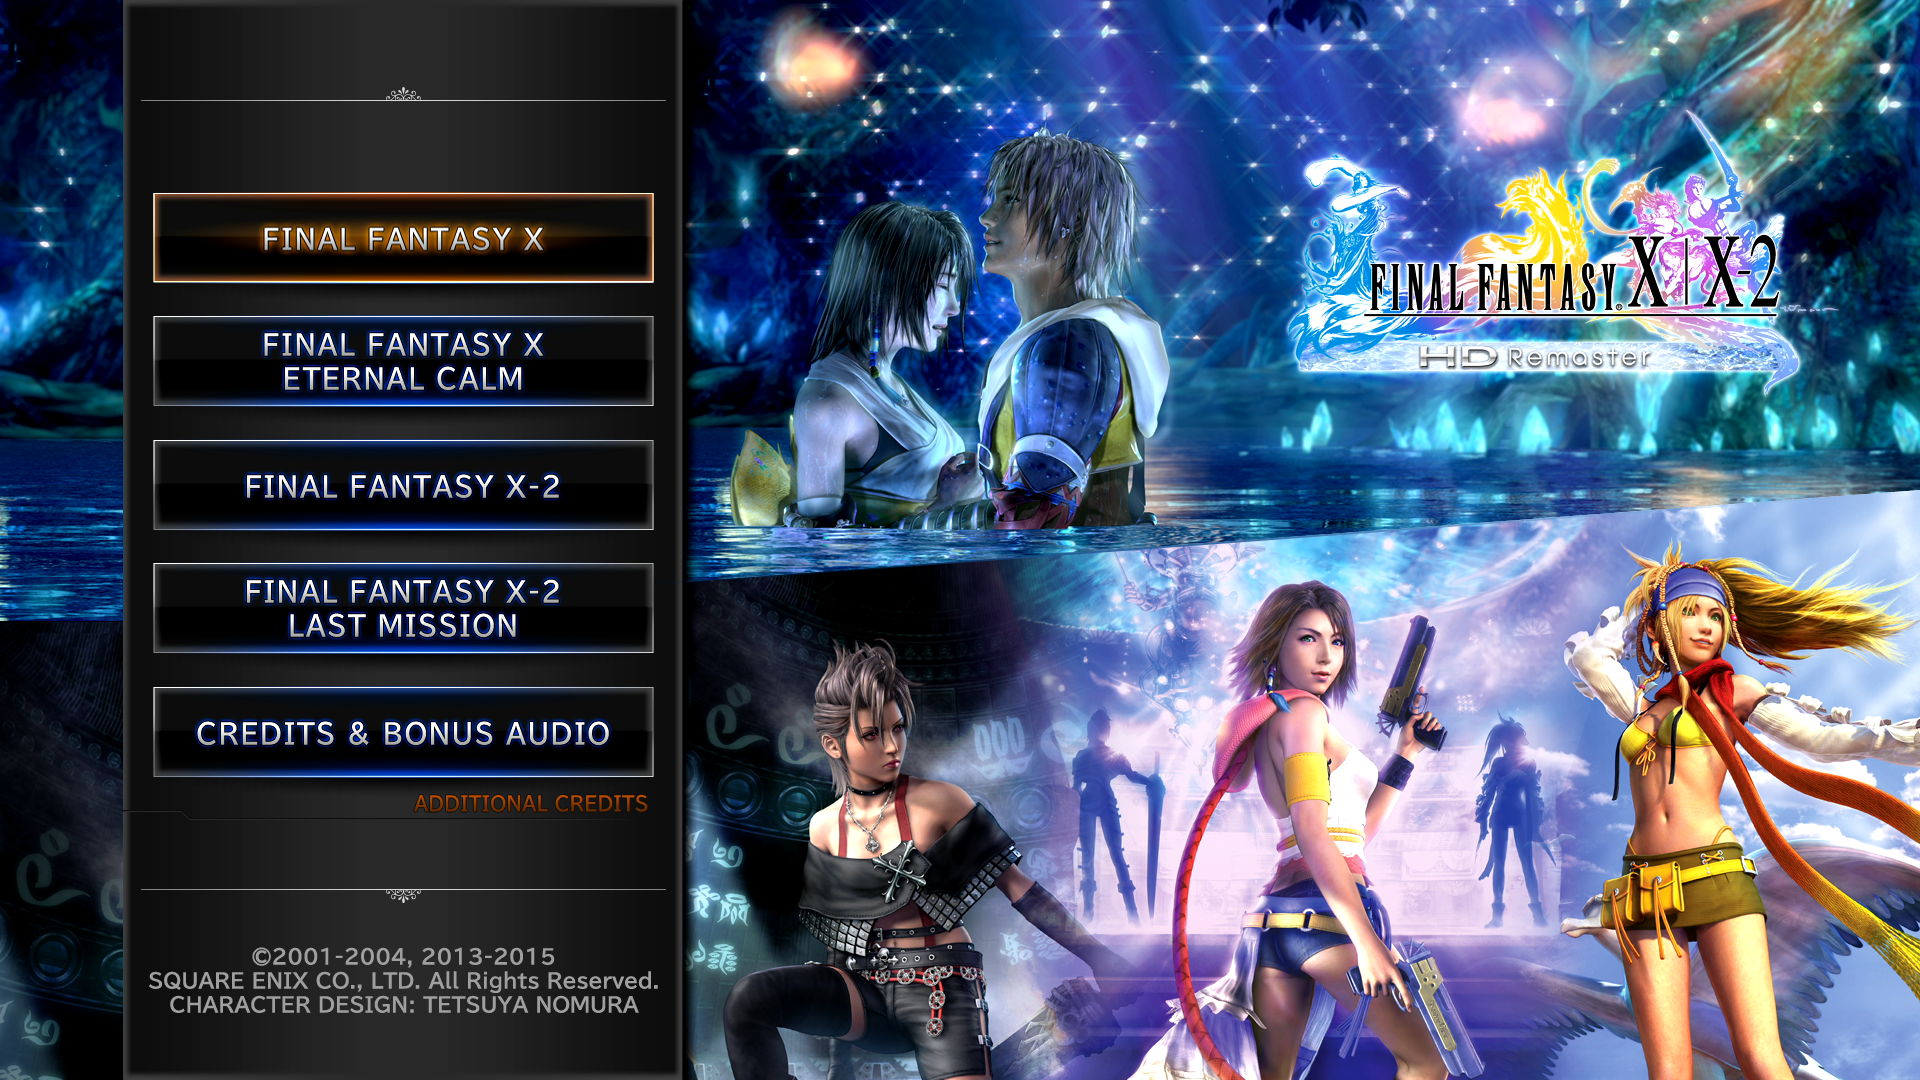 Final Fantasy X X 2 Hd Remaster Final Fantasy Wiki Fandom